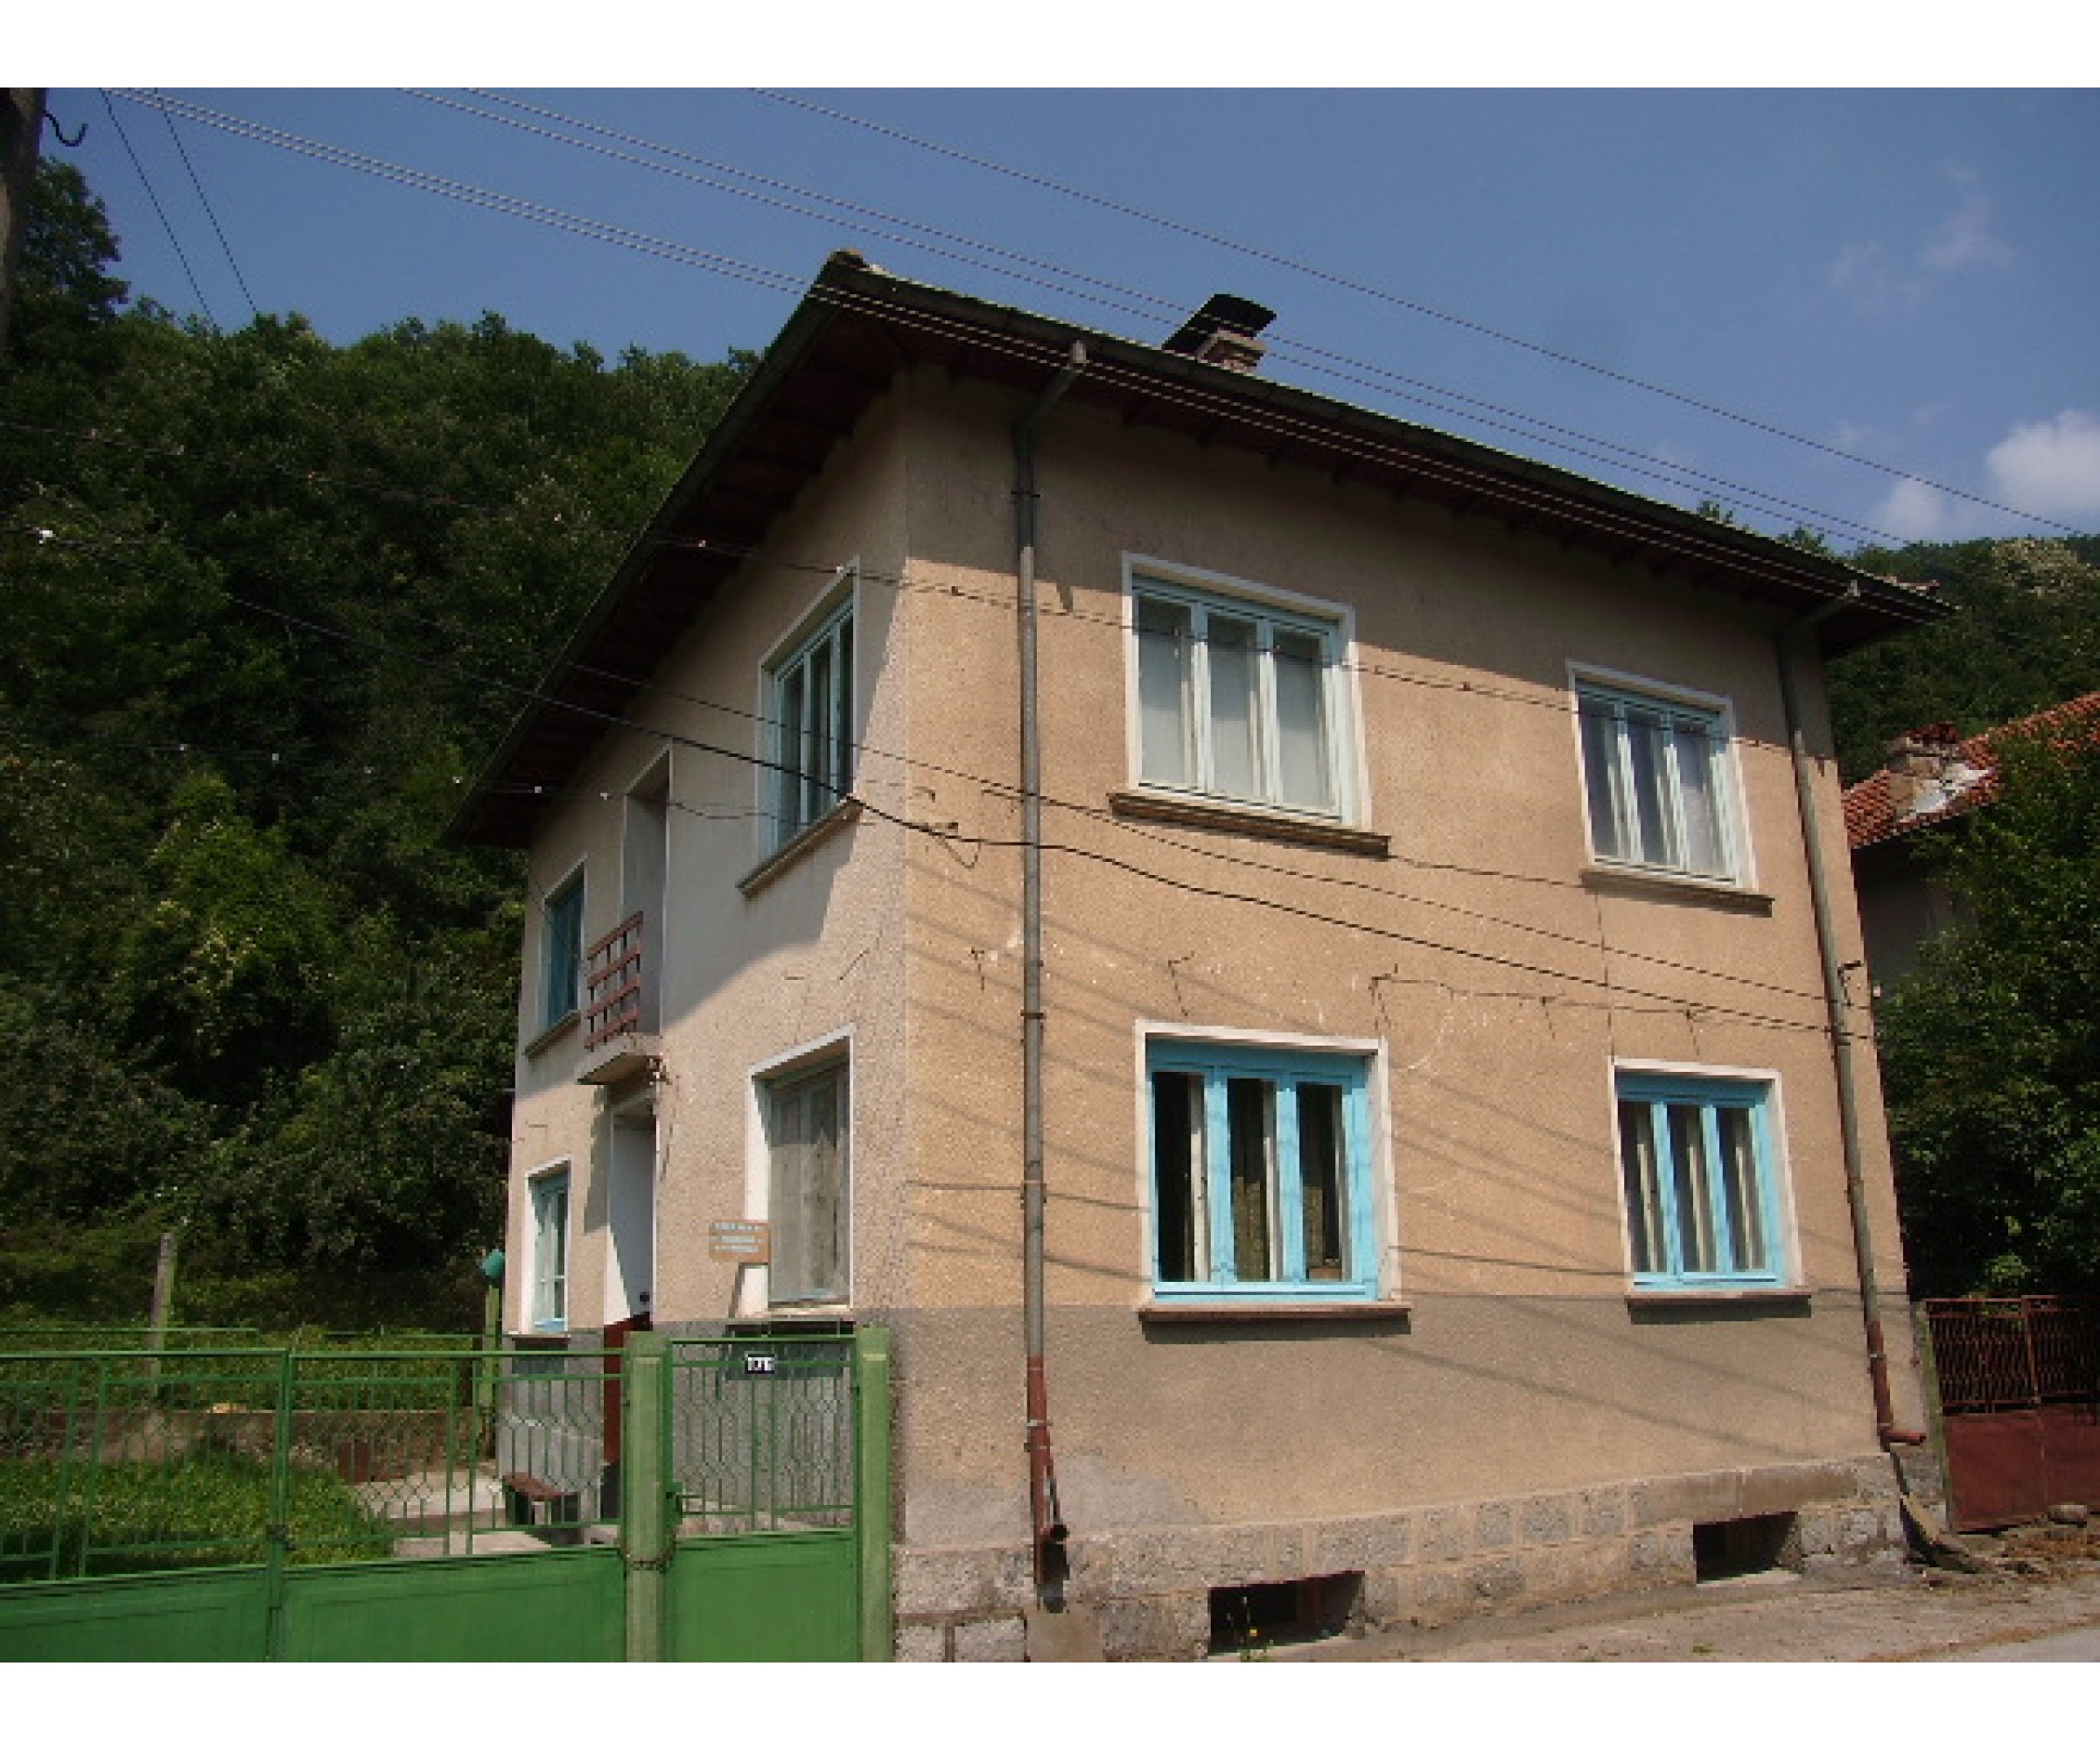 Three-storey house in the village of Cherni Vit